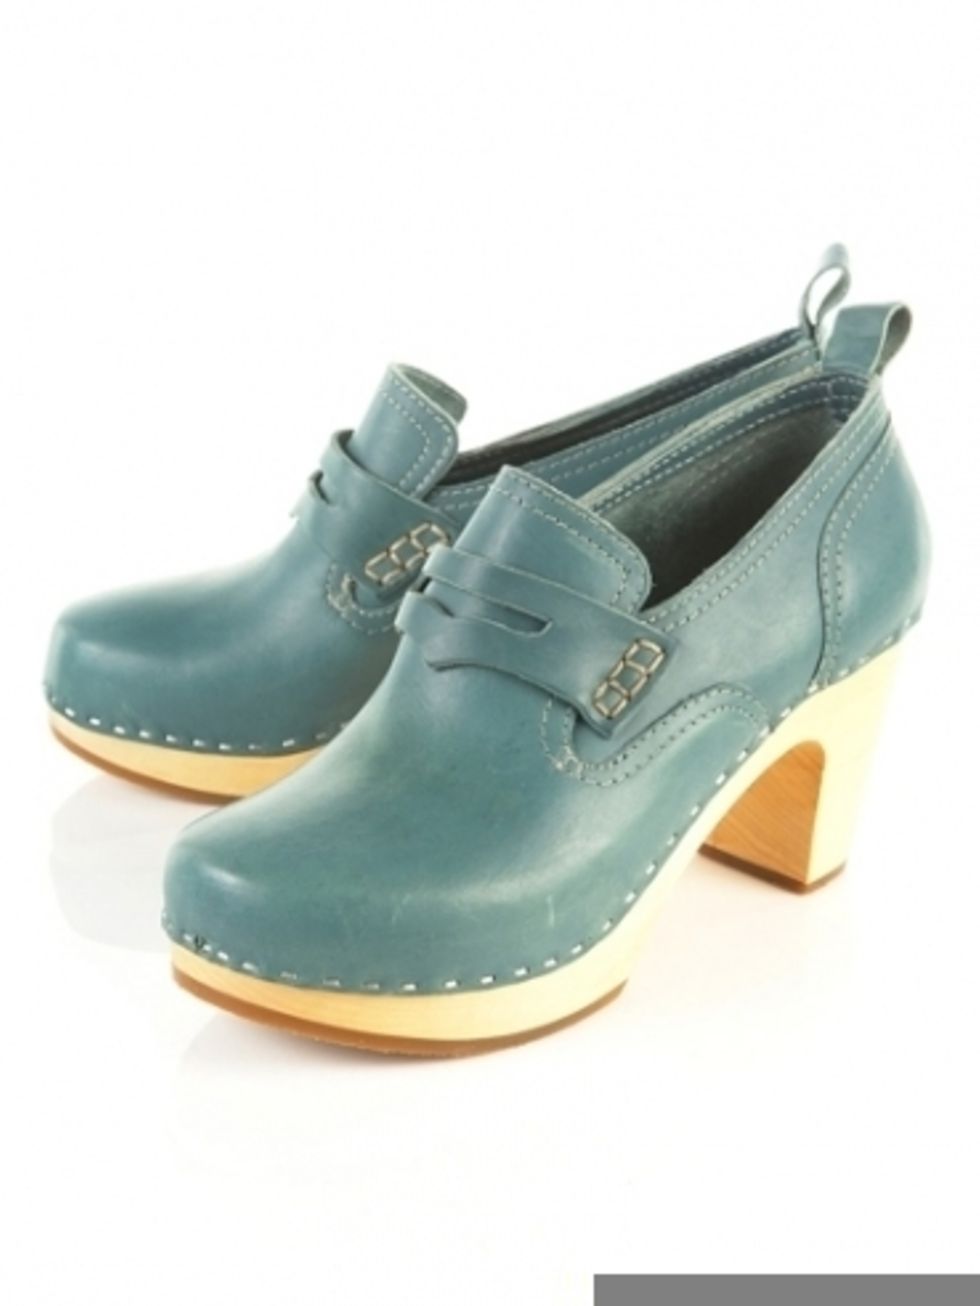 Footwear, Blue, Product, Teal, Aqua, Turquoise, Boot, Fashion, Leather, Beige, 